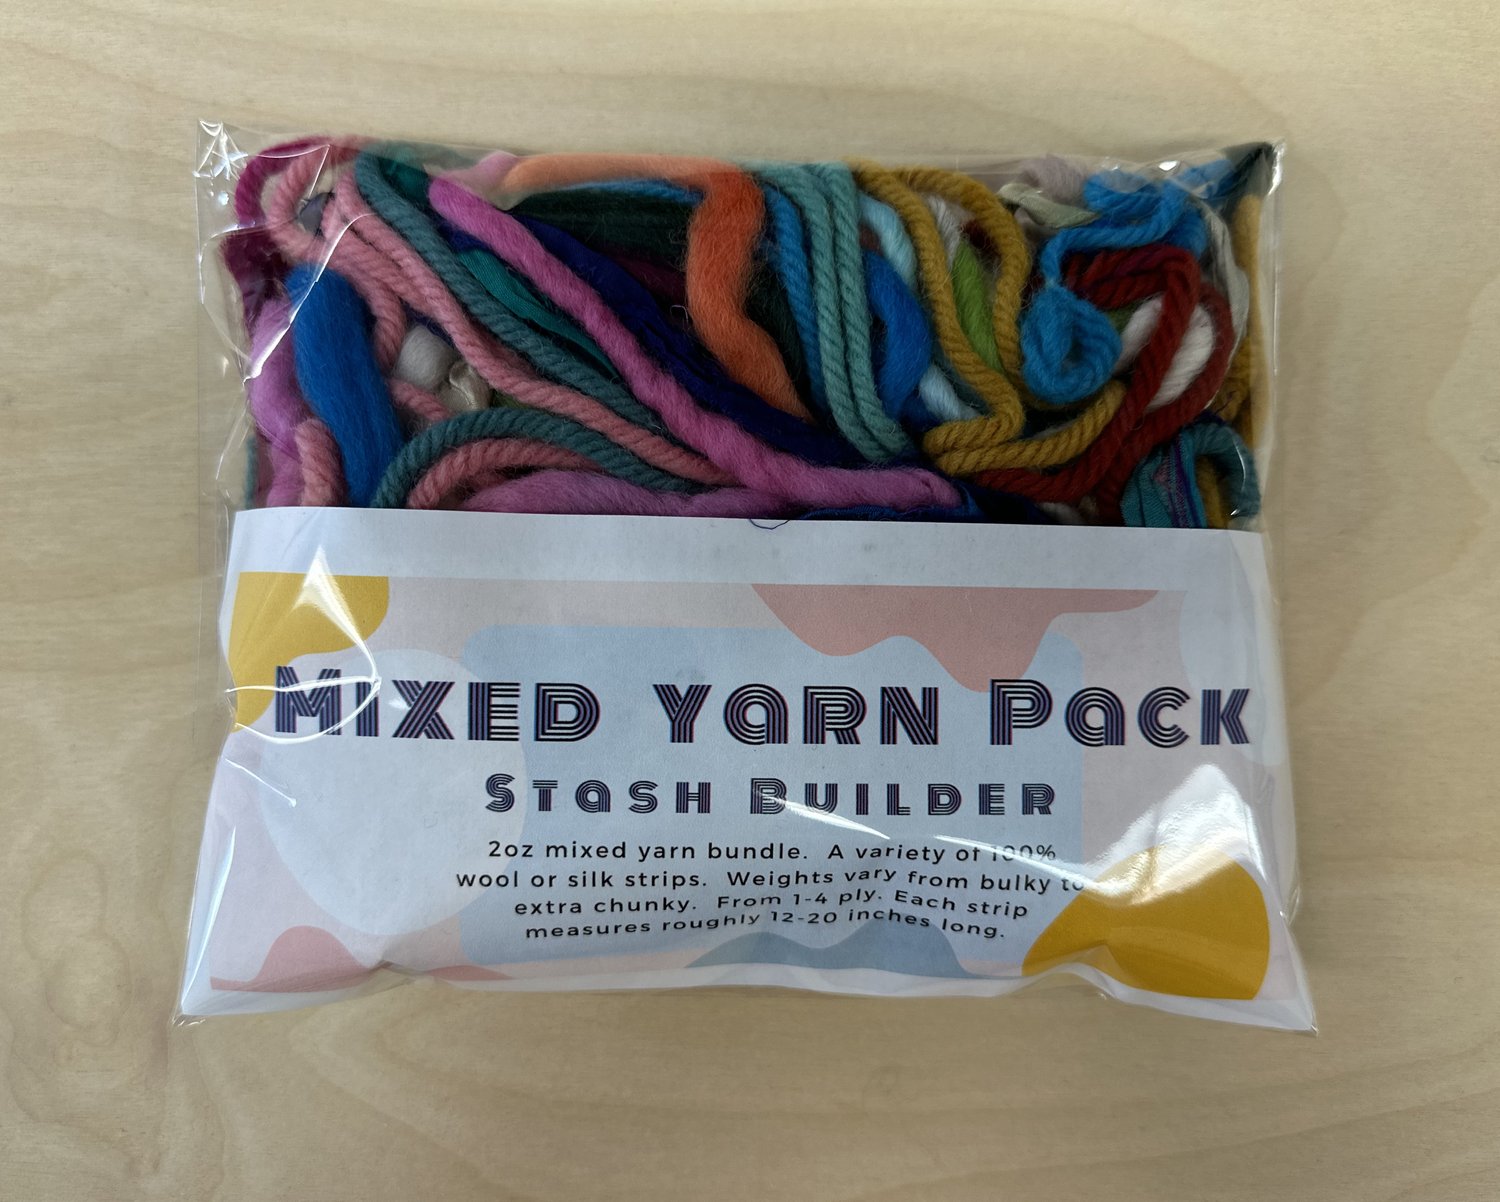 2oz Mixed Yarn Bundles - 100% Wool and Silk - Yarn Pieces to Use